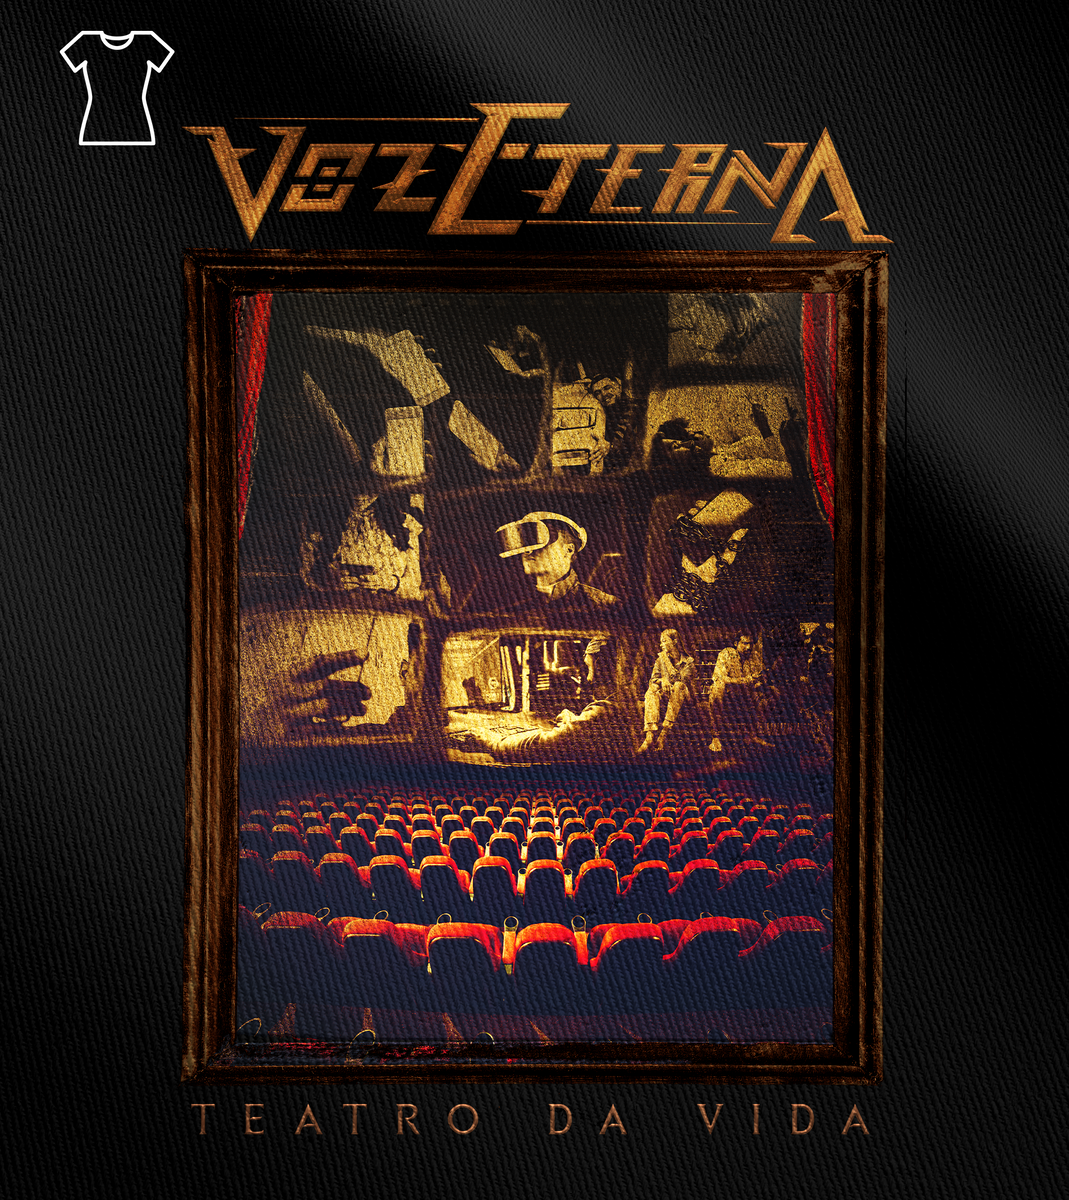 Nome do produto: Camiseta Feminina Voz Eterna - Teatro da Vida